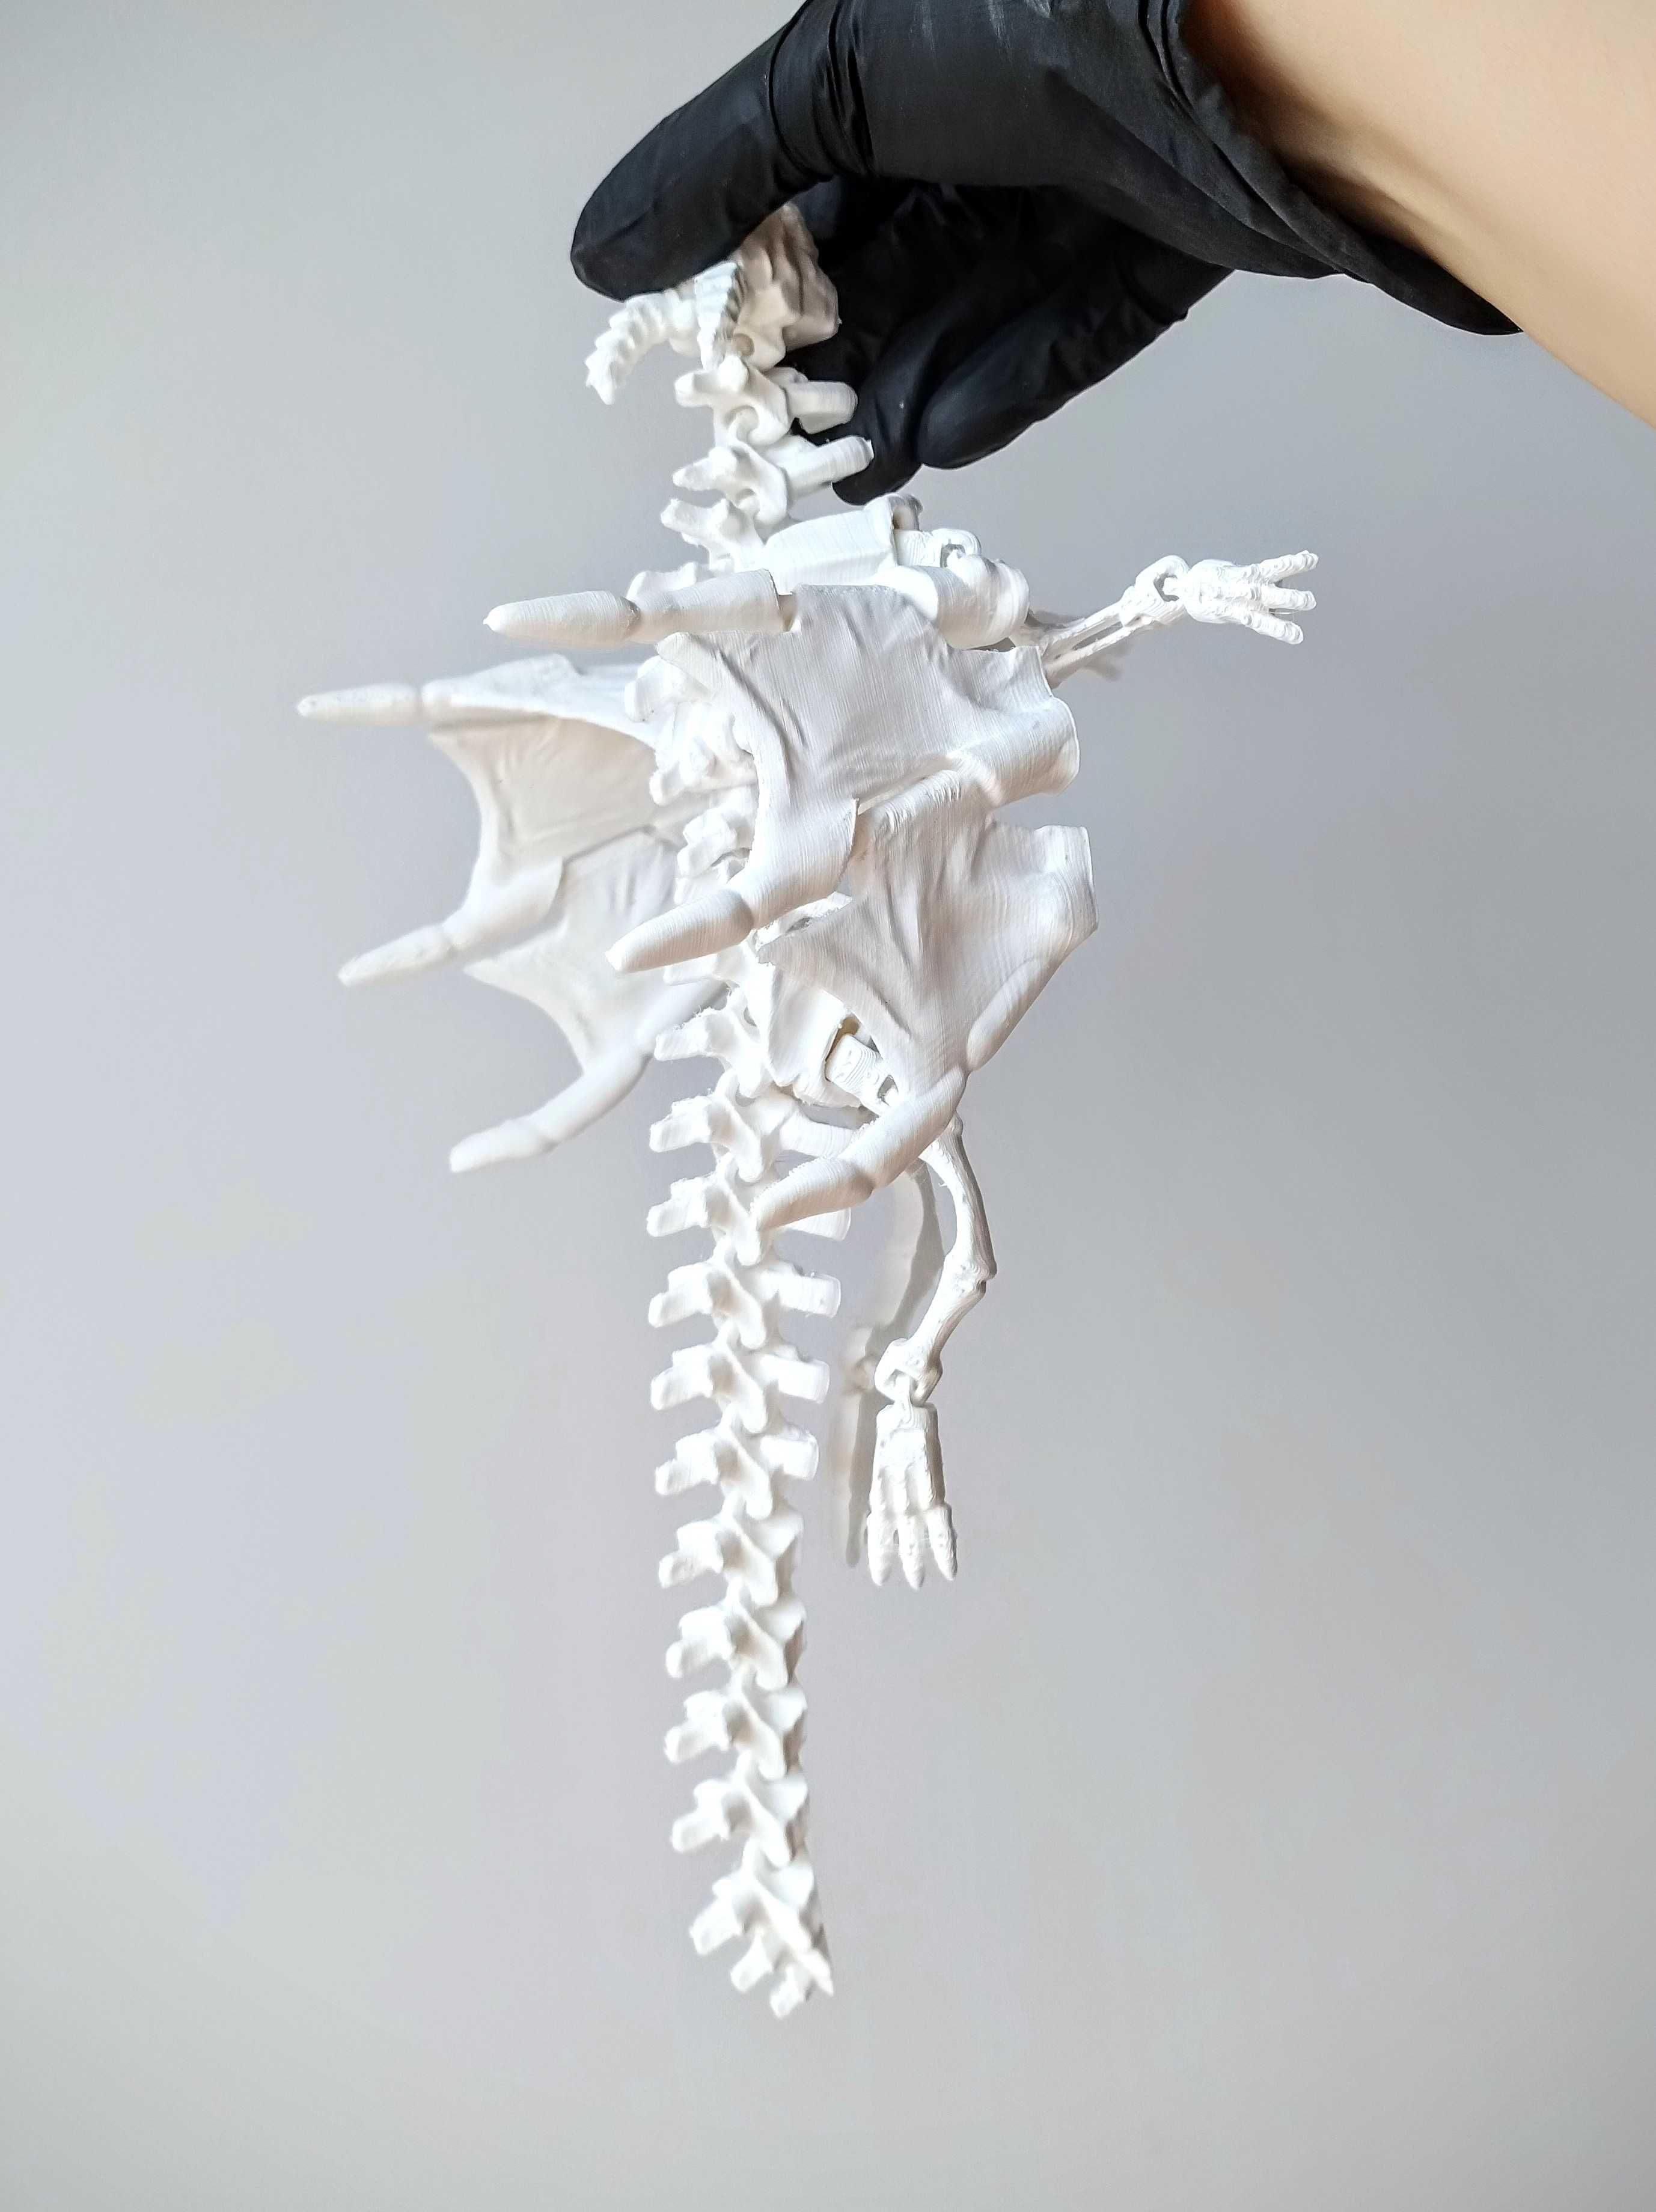 Szkielet smoka kolekcjonerska figurka smok szkielet ozdoba ruchoma XL